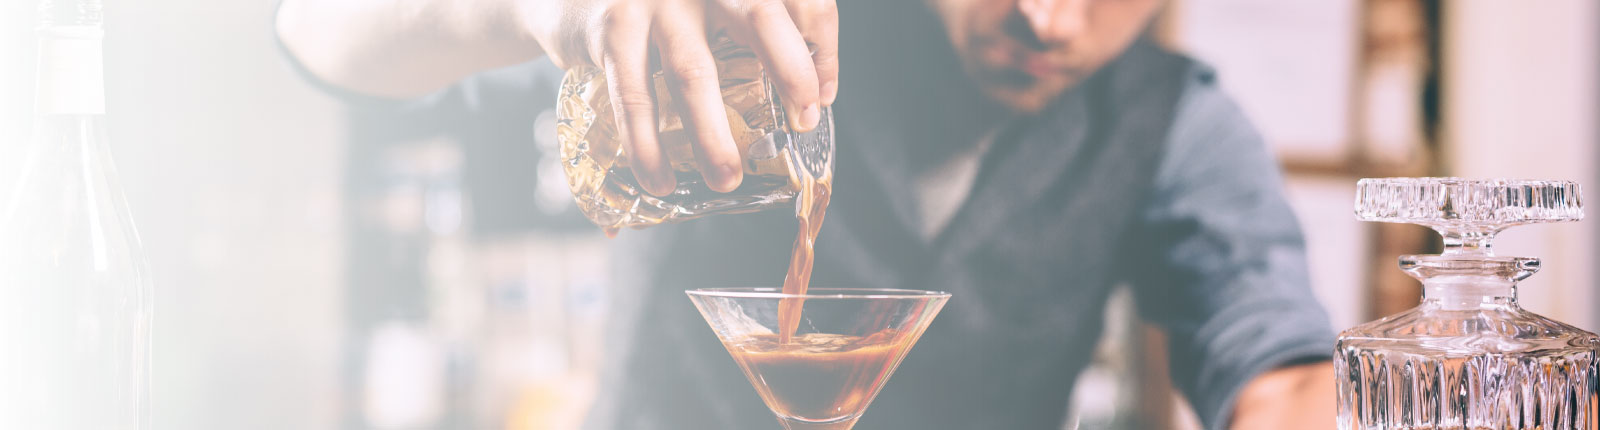 bartender pouring cocktail at bar